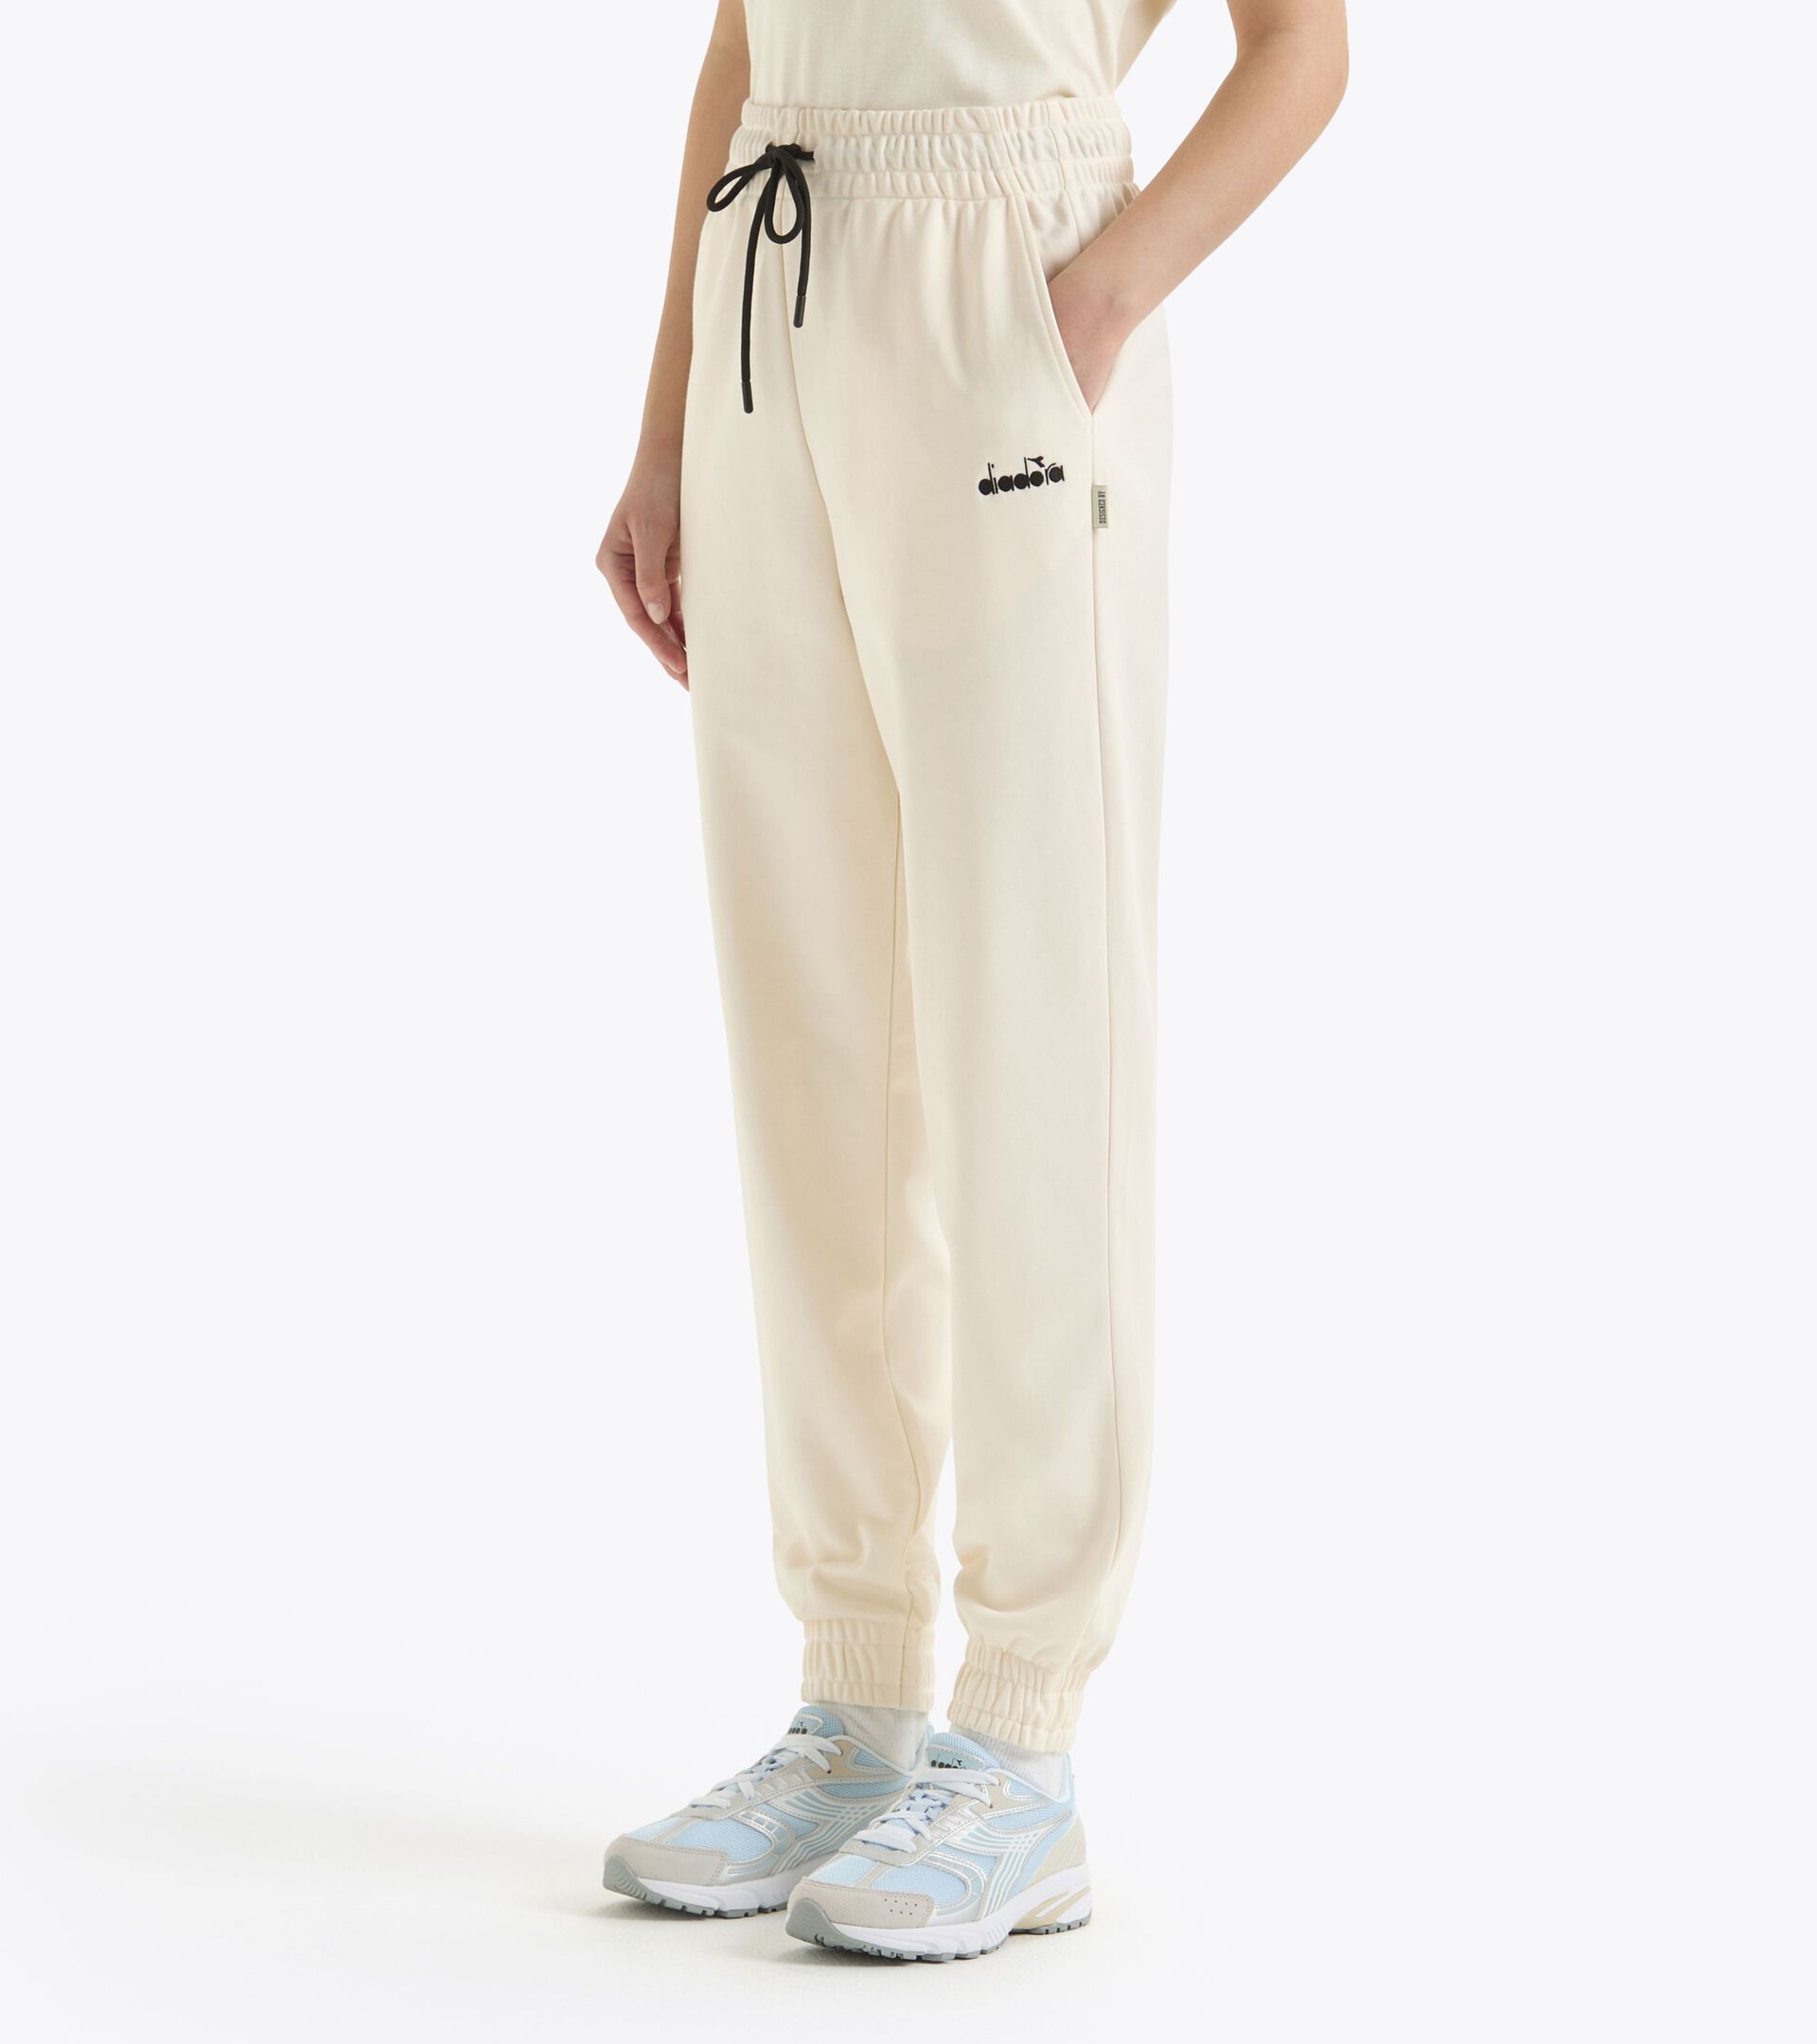 Pantalones deportivos - Gender neutral TRACK PANTS 80S BLANCO MURMURAR - Diadora